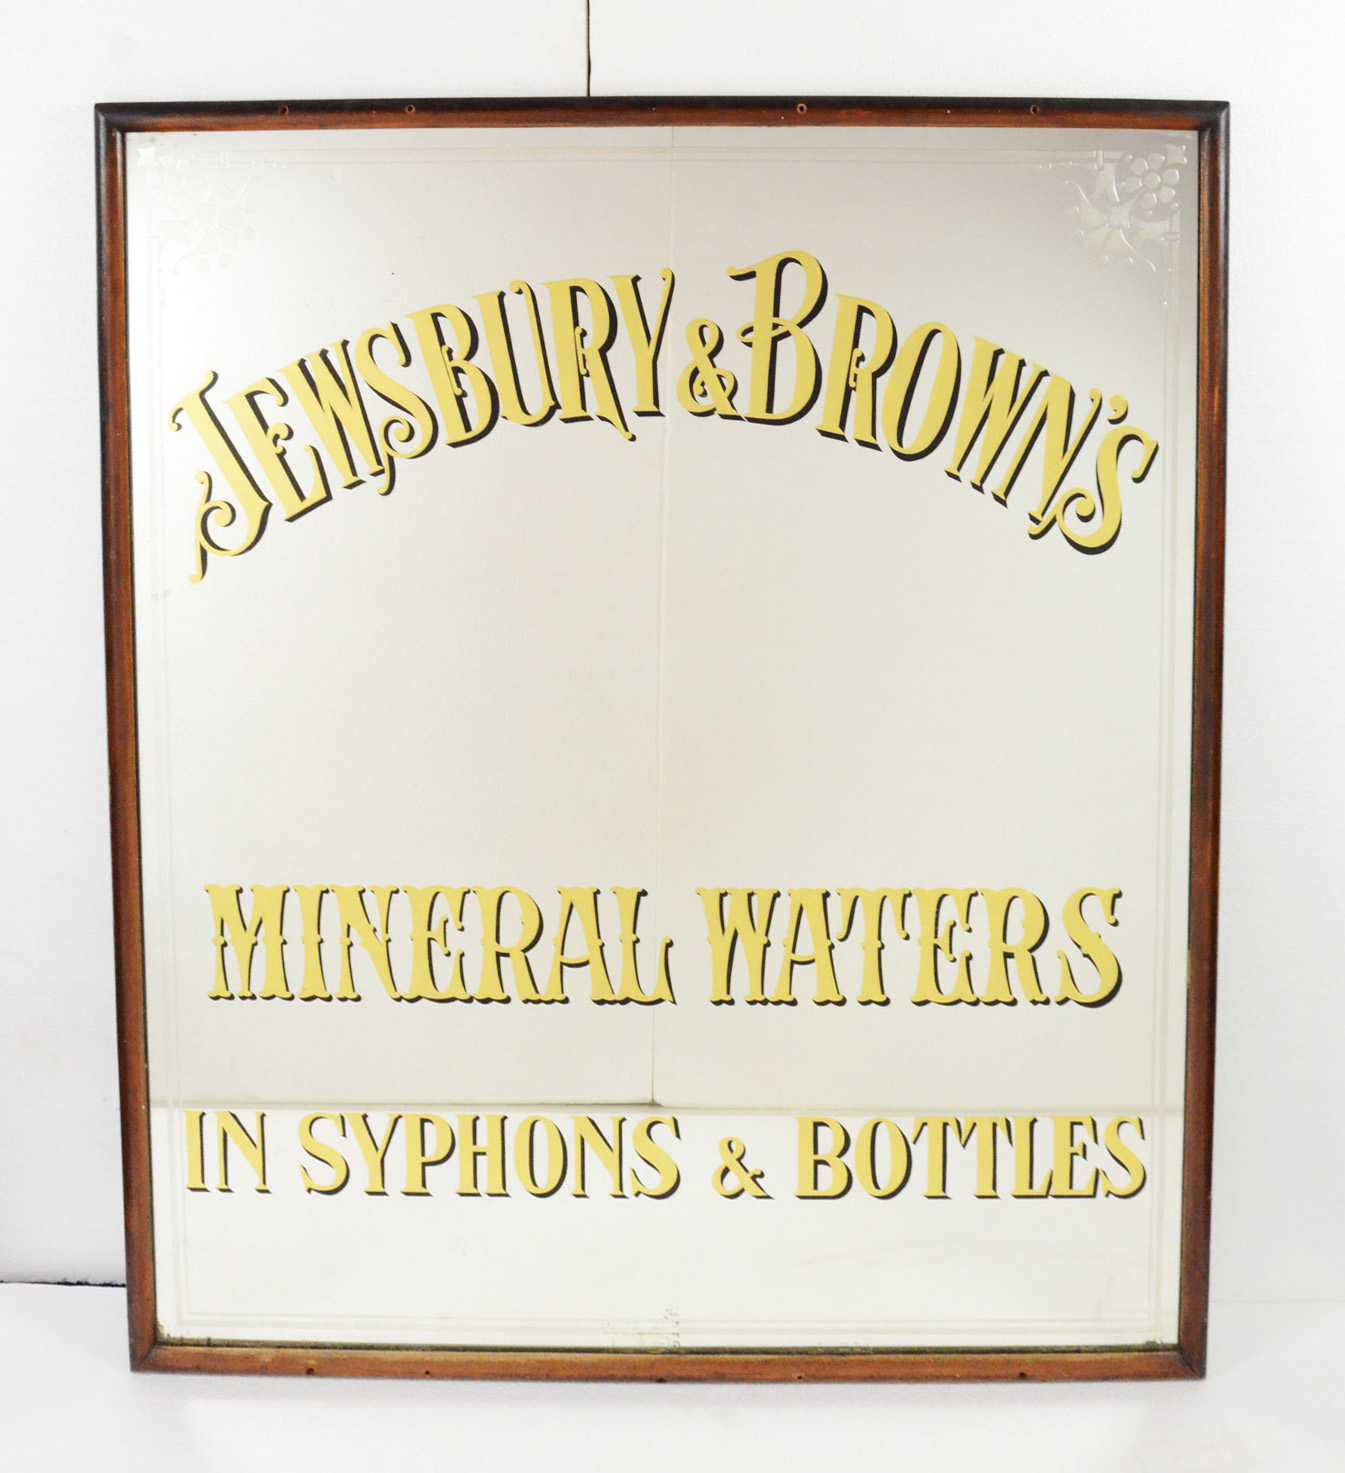 Jewsbury & Brown's advertisement on large mirror